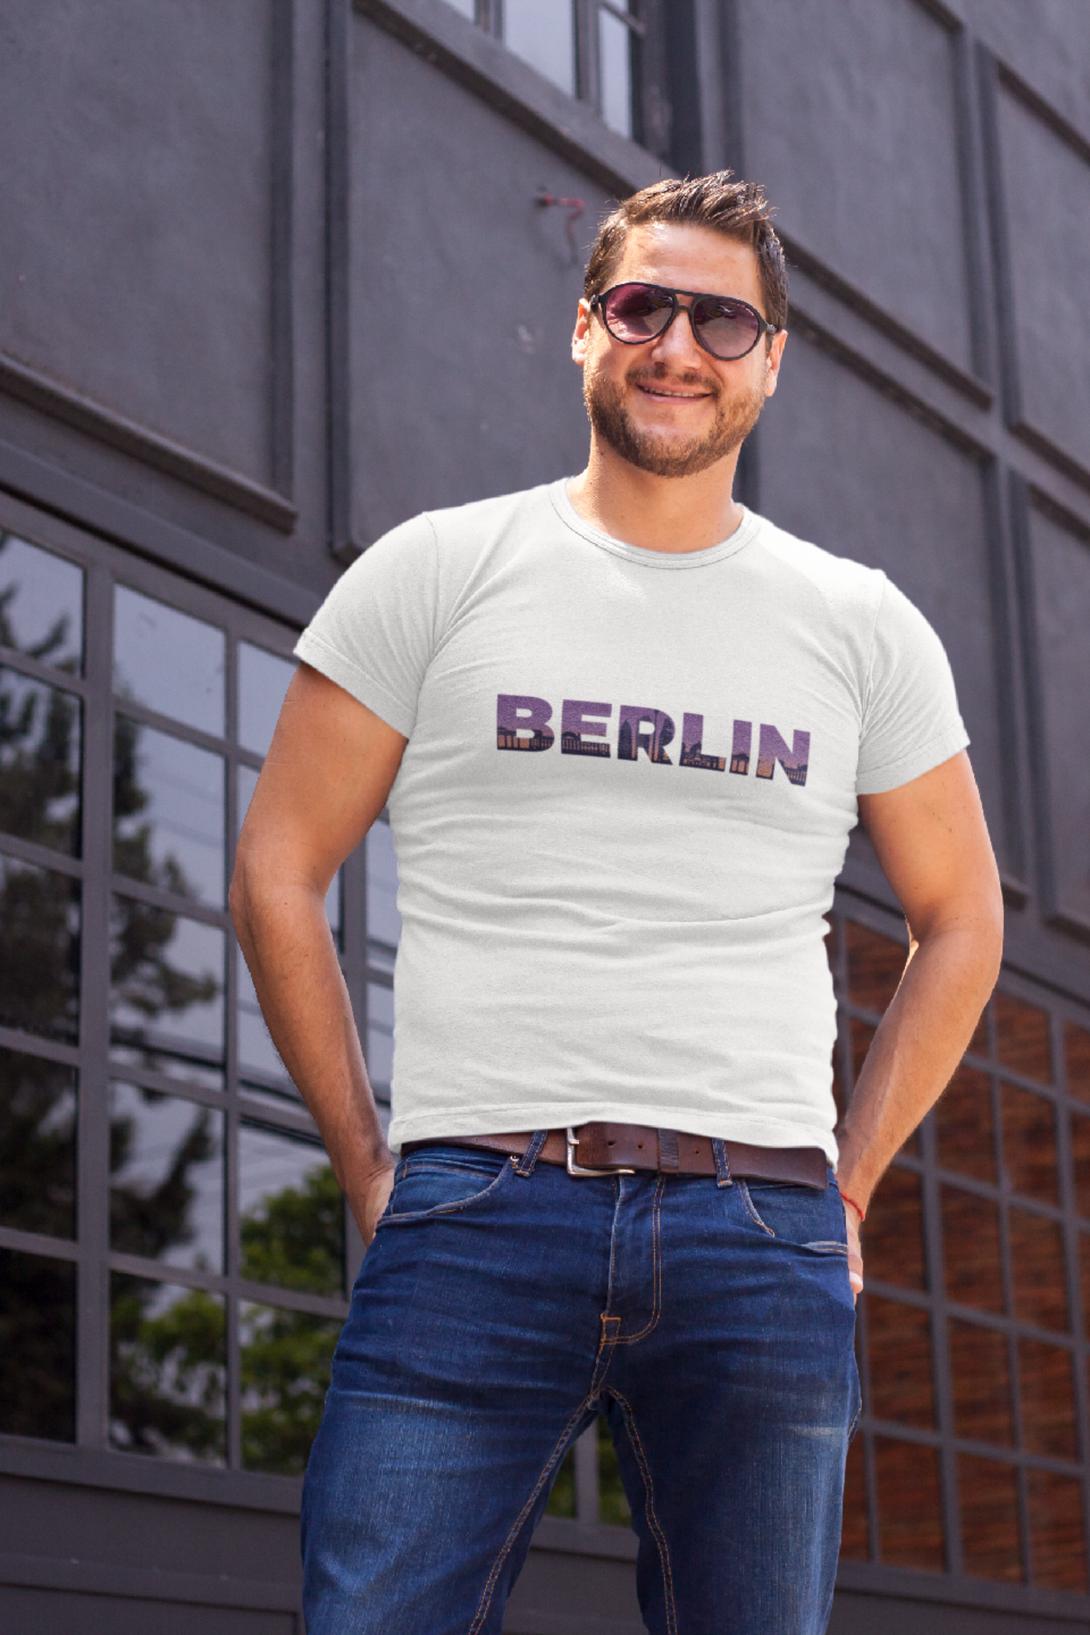 Berlin Skyline Printed T-Shirt For Men - WowWaves - 2